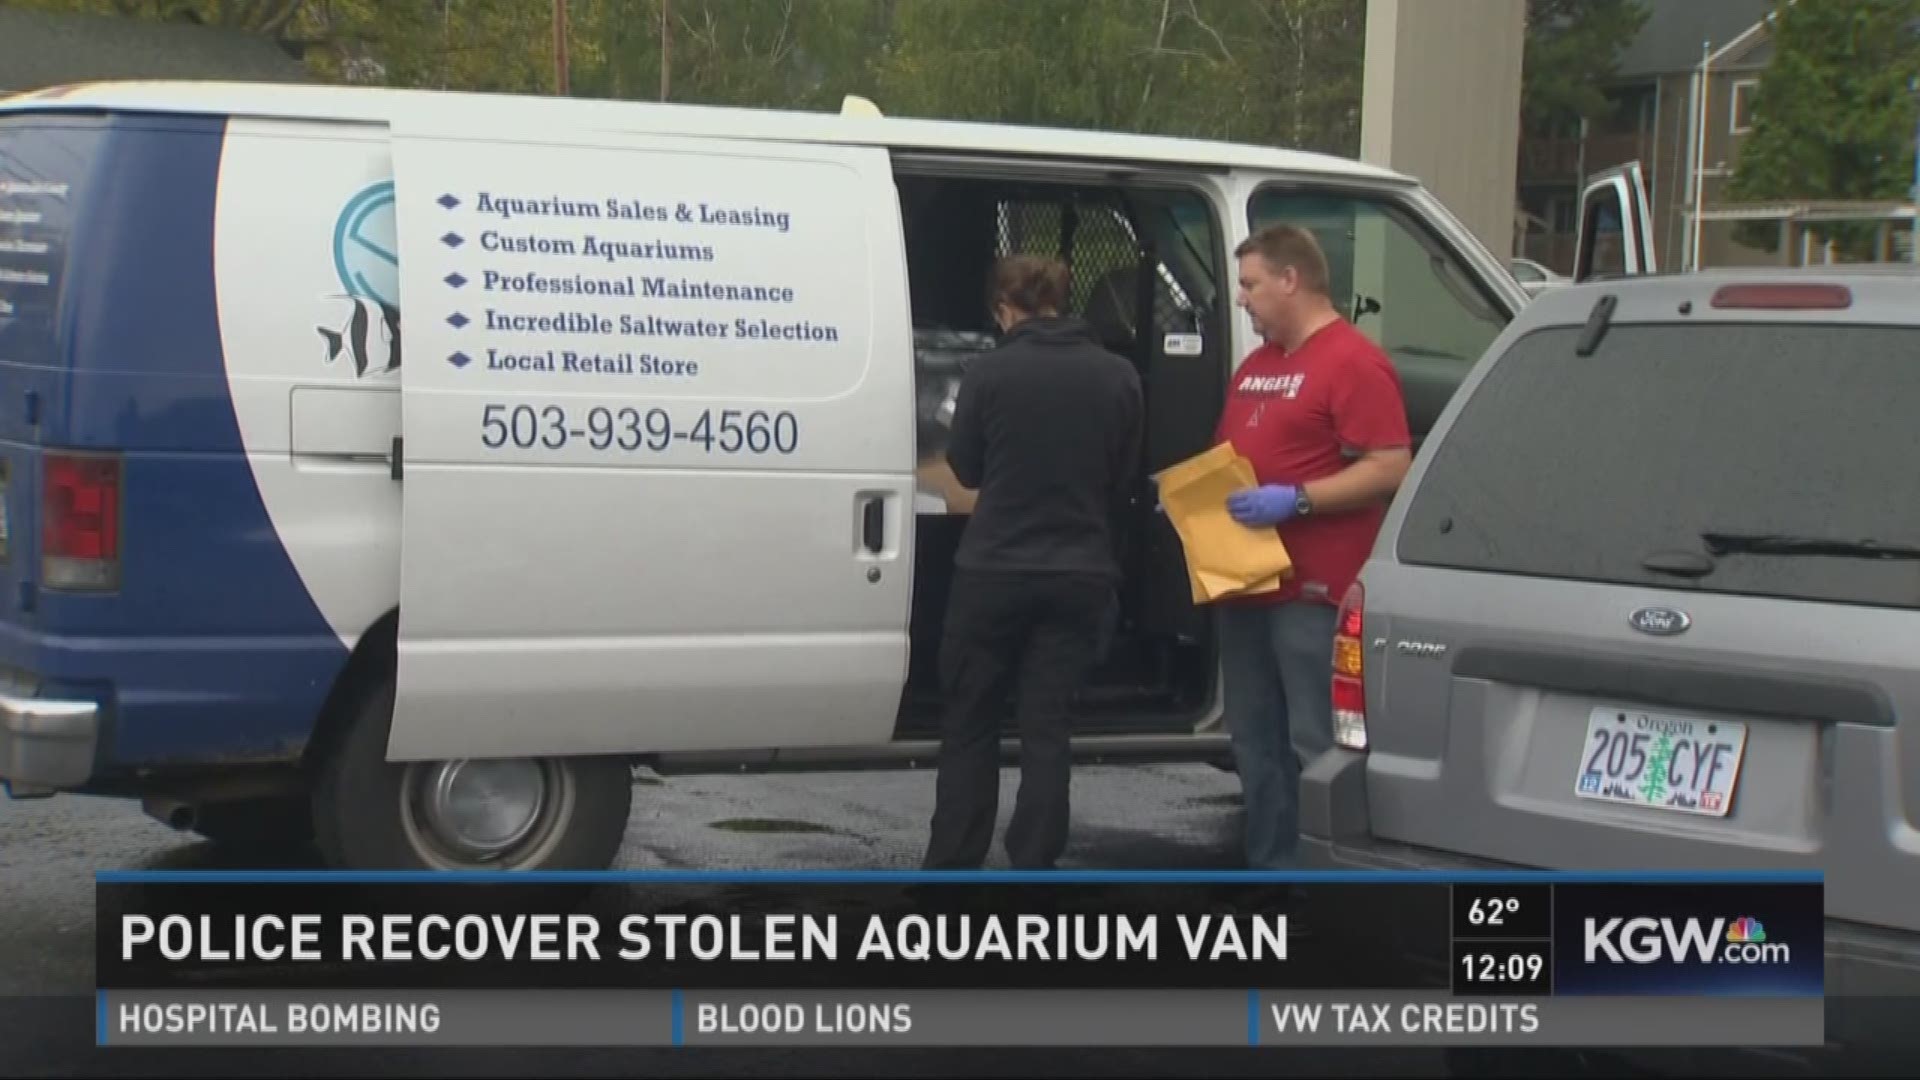 Police recover van stolen from Gresham aquarium shop